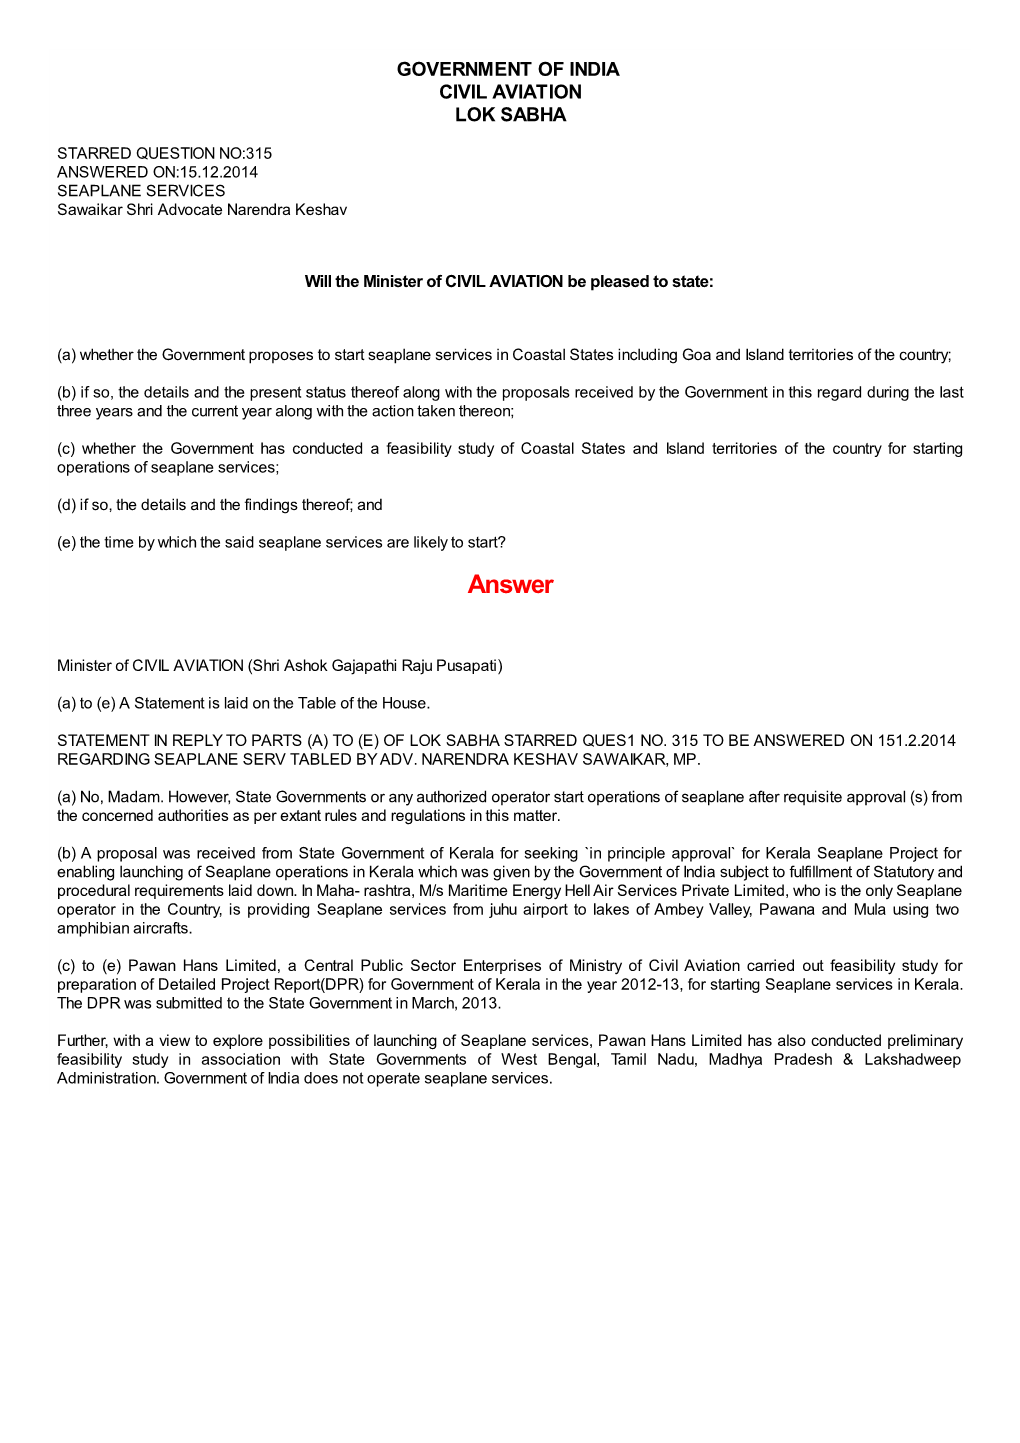 ANSWERED ON:15.12.2014 SEAPLANE SERVICES Sawaikar Shri Advocate Narendra Keshav